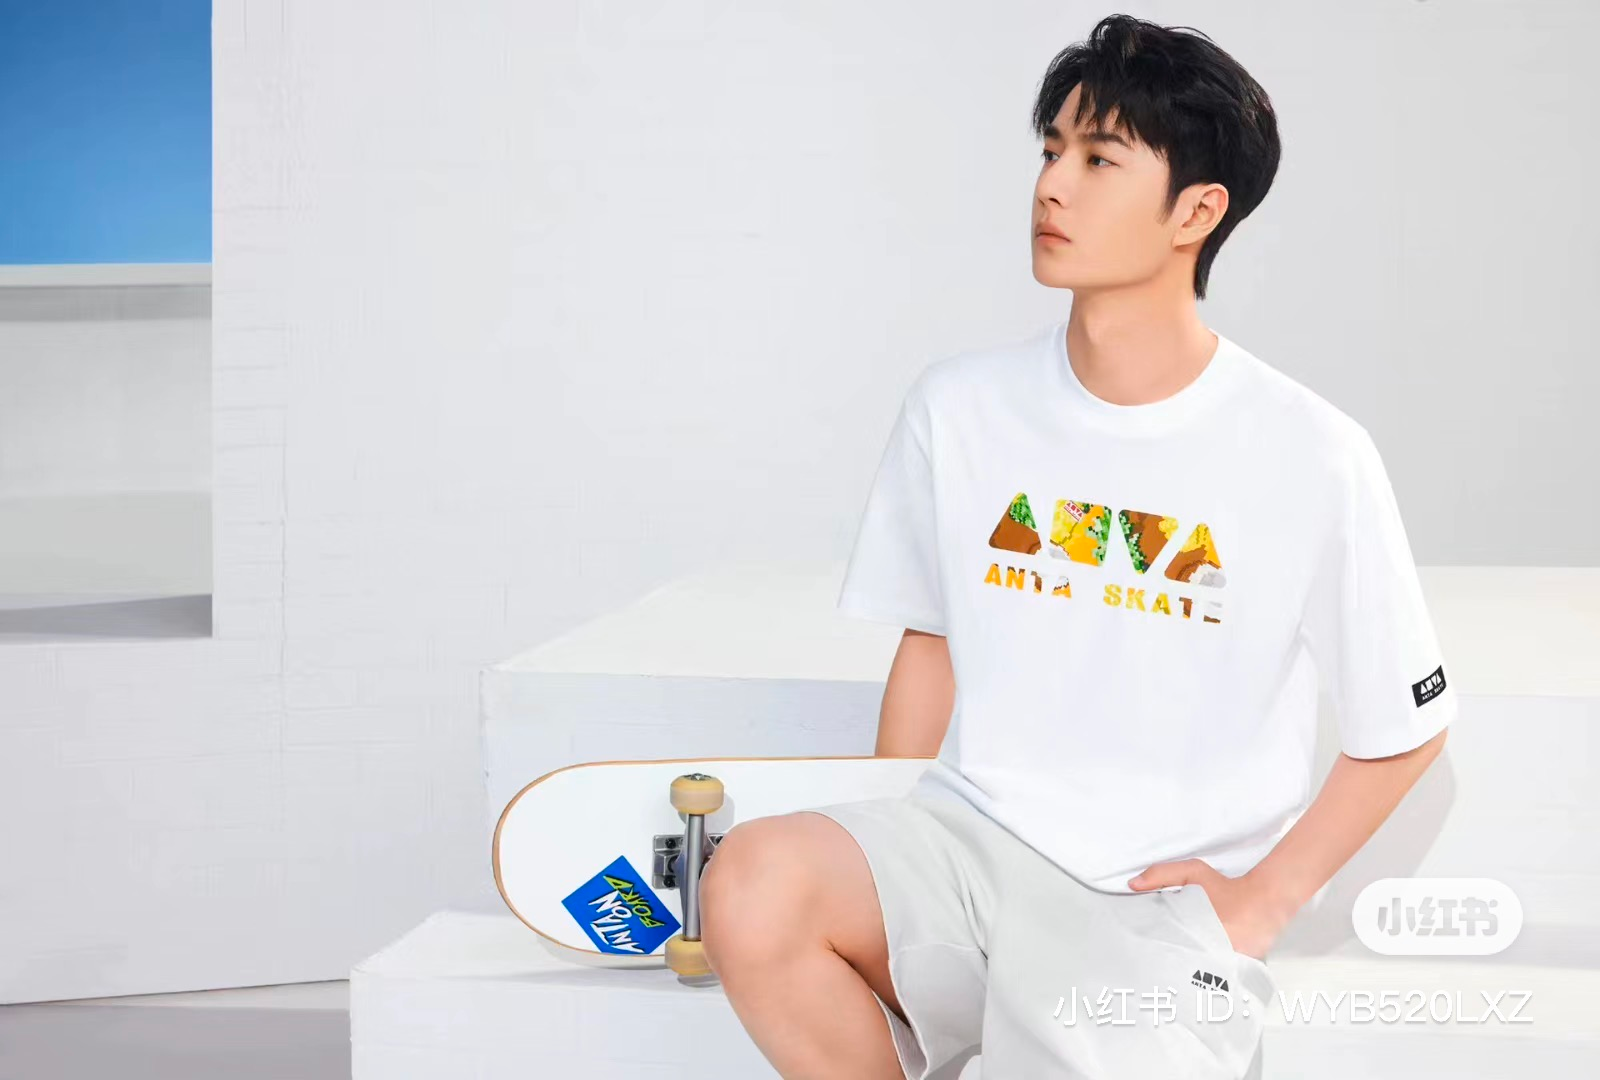 Brand ambassador Wang Yibo promotes Anta’s skateboarding line. Photo: Anta